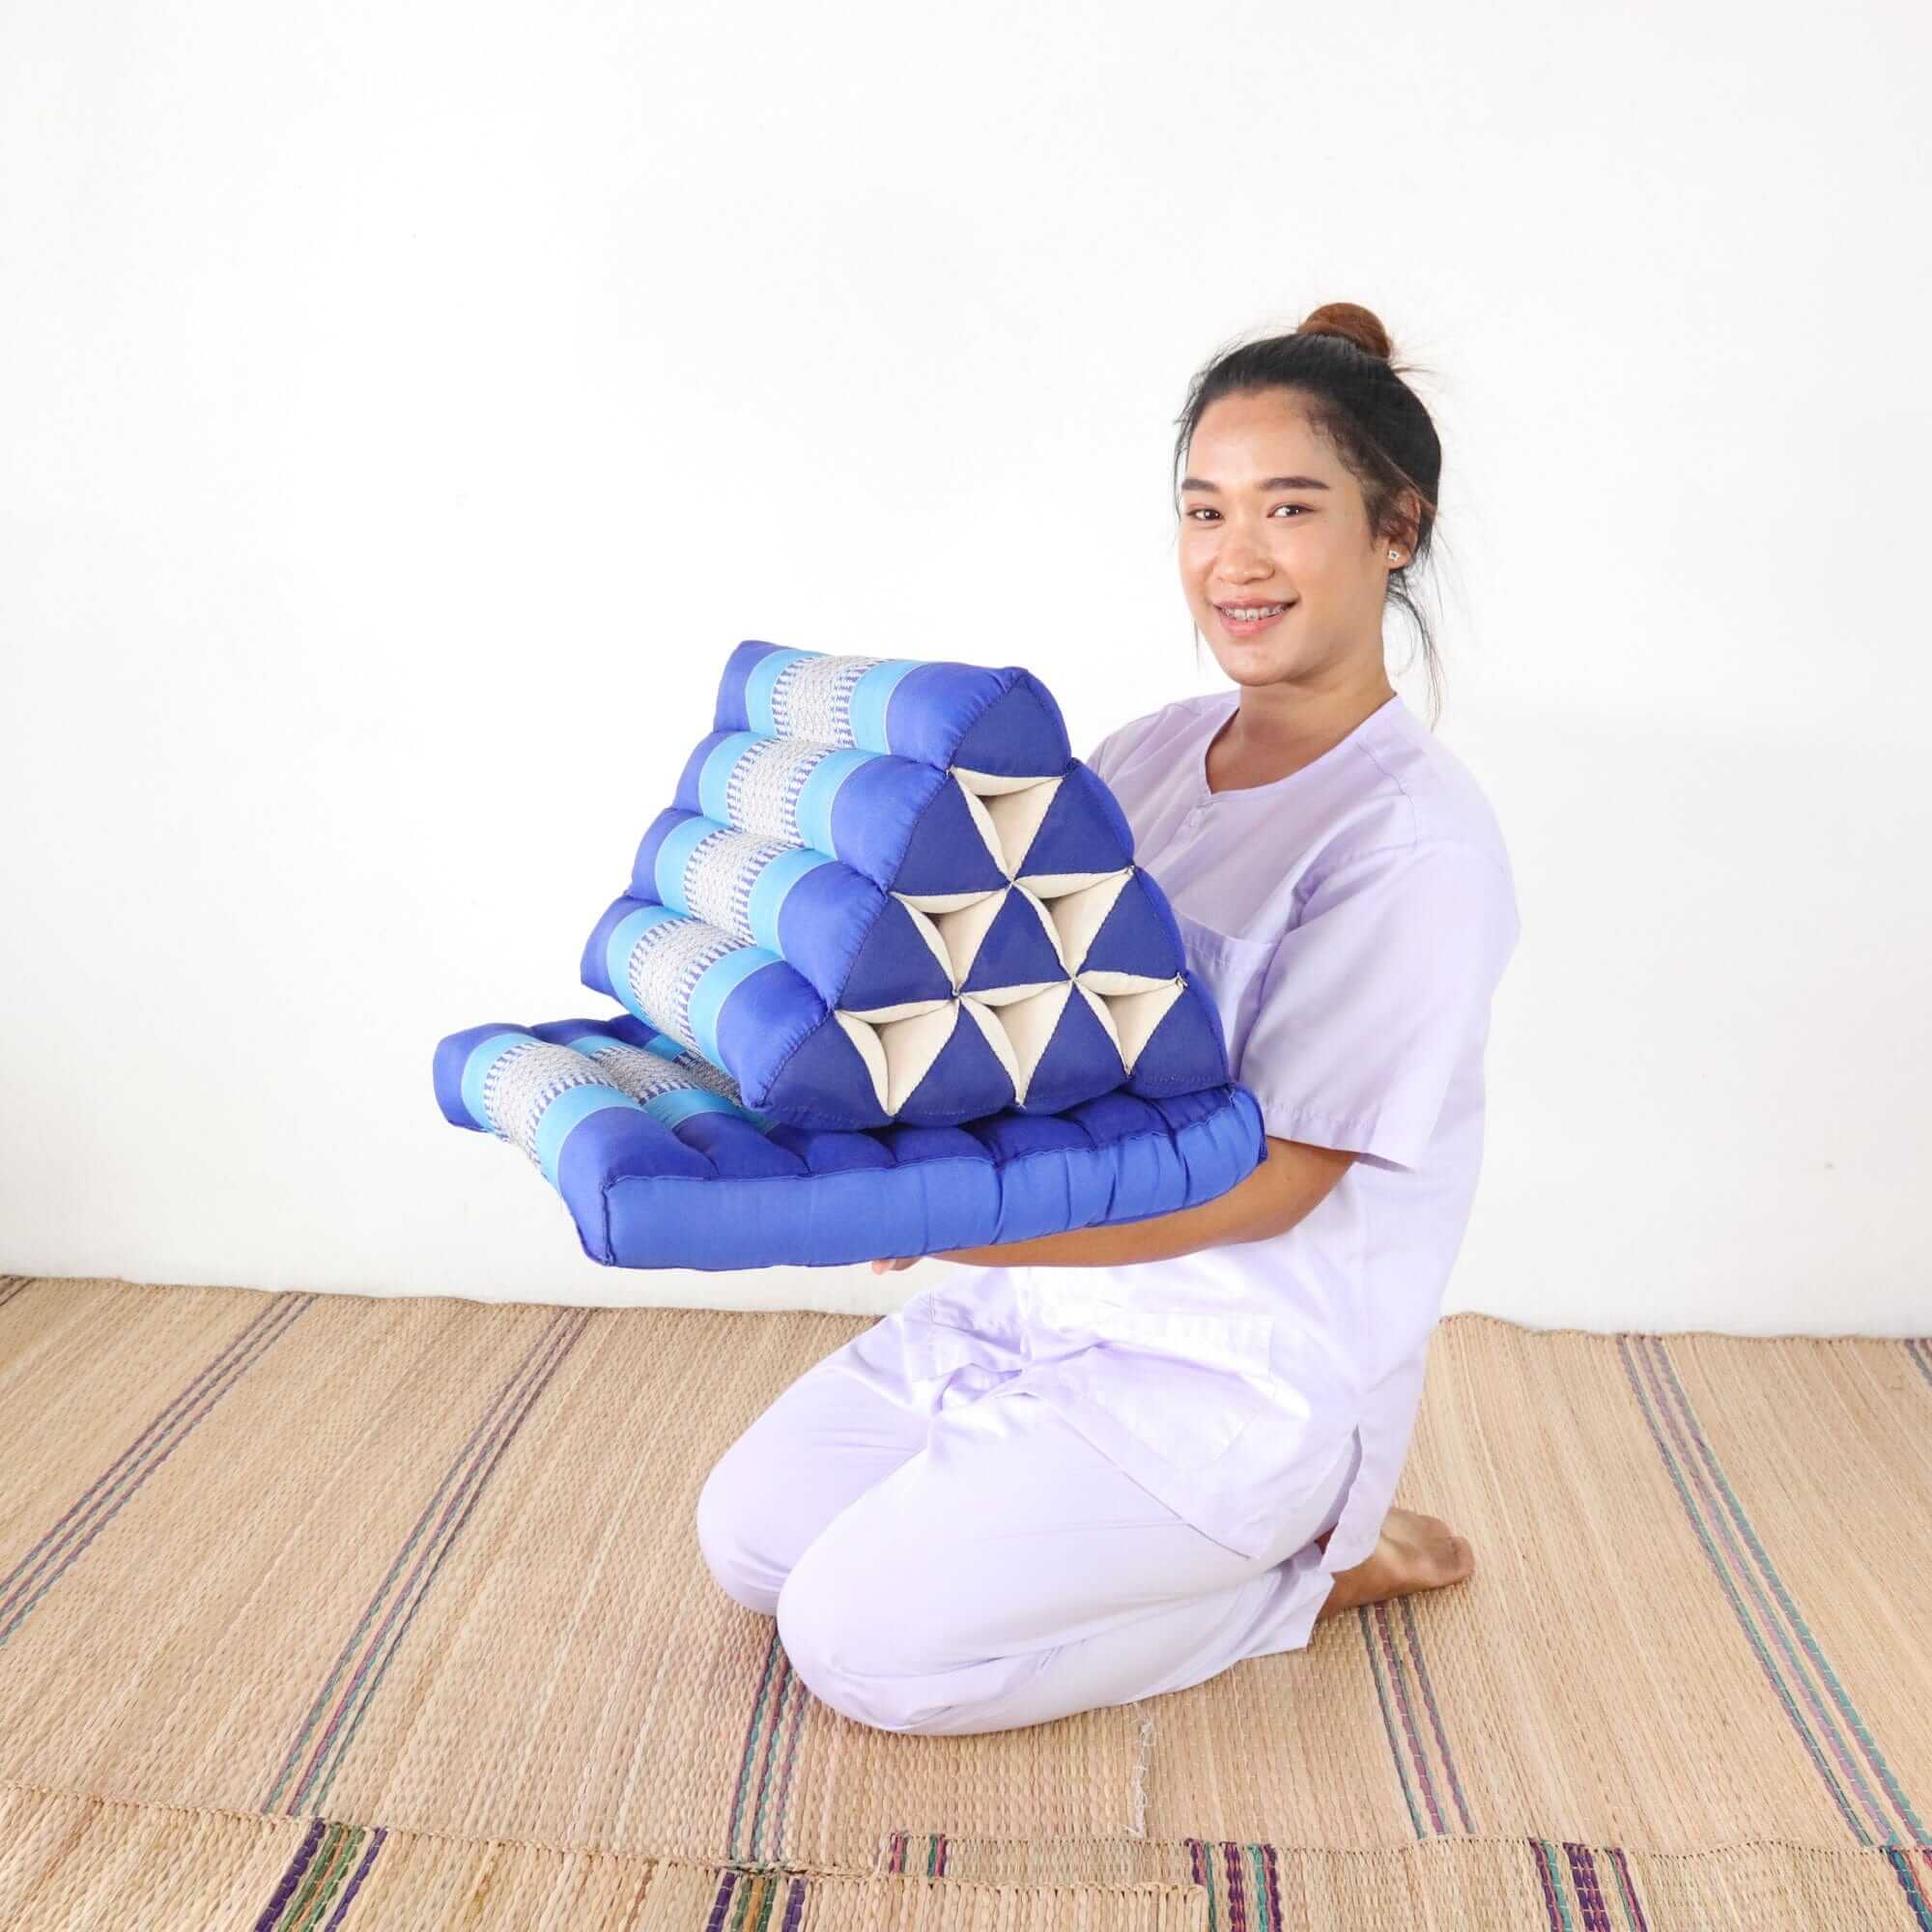 THAIHOME 1 Fold Cushion NA VI DA - Thai Triangle Cushion (1 fold )